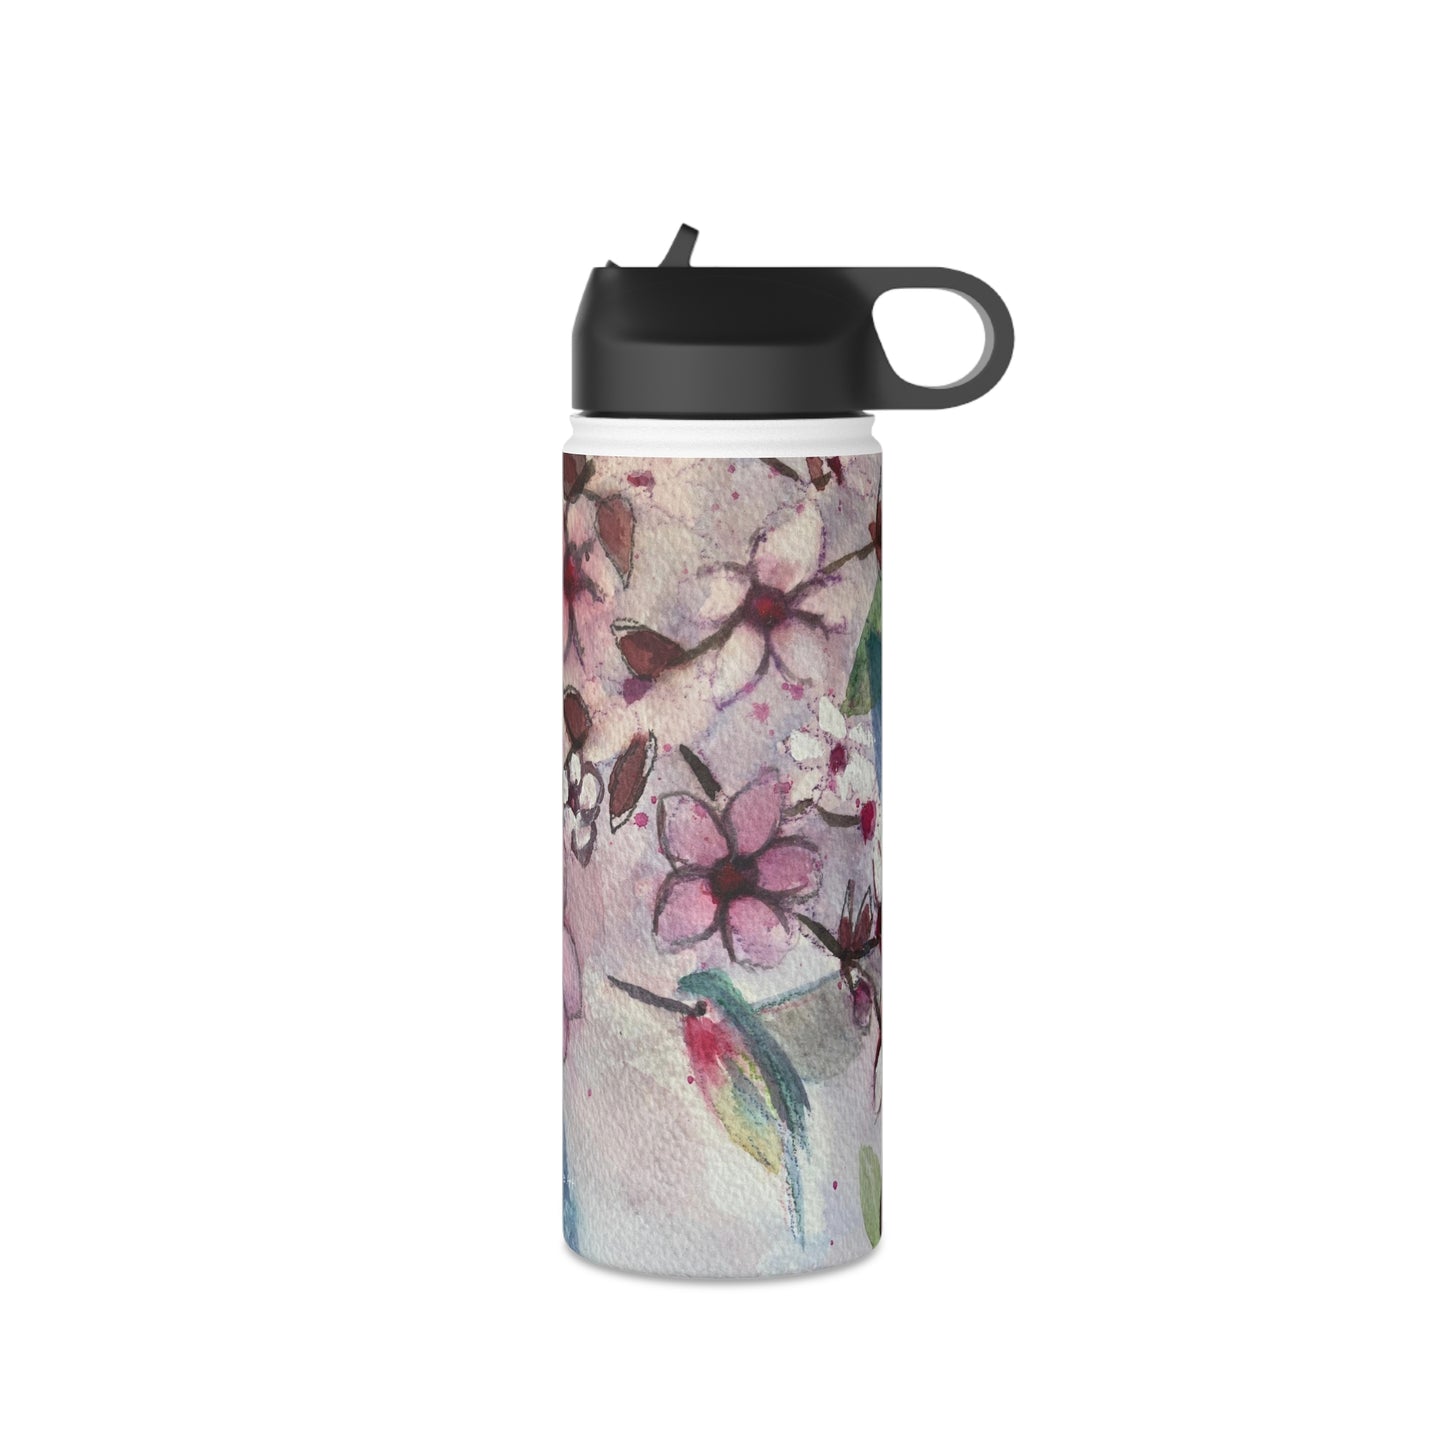 Botella de agua de acero inoxidable con diseño de colibrí en flores de cerezo, tapa estándar